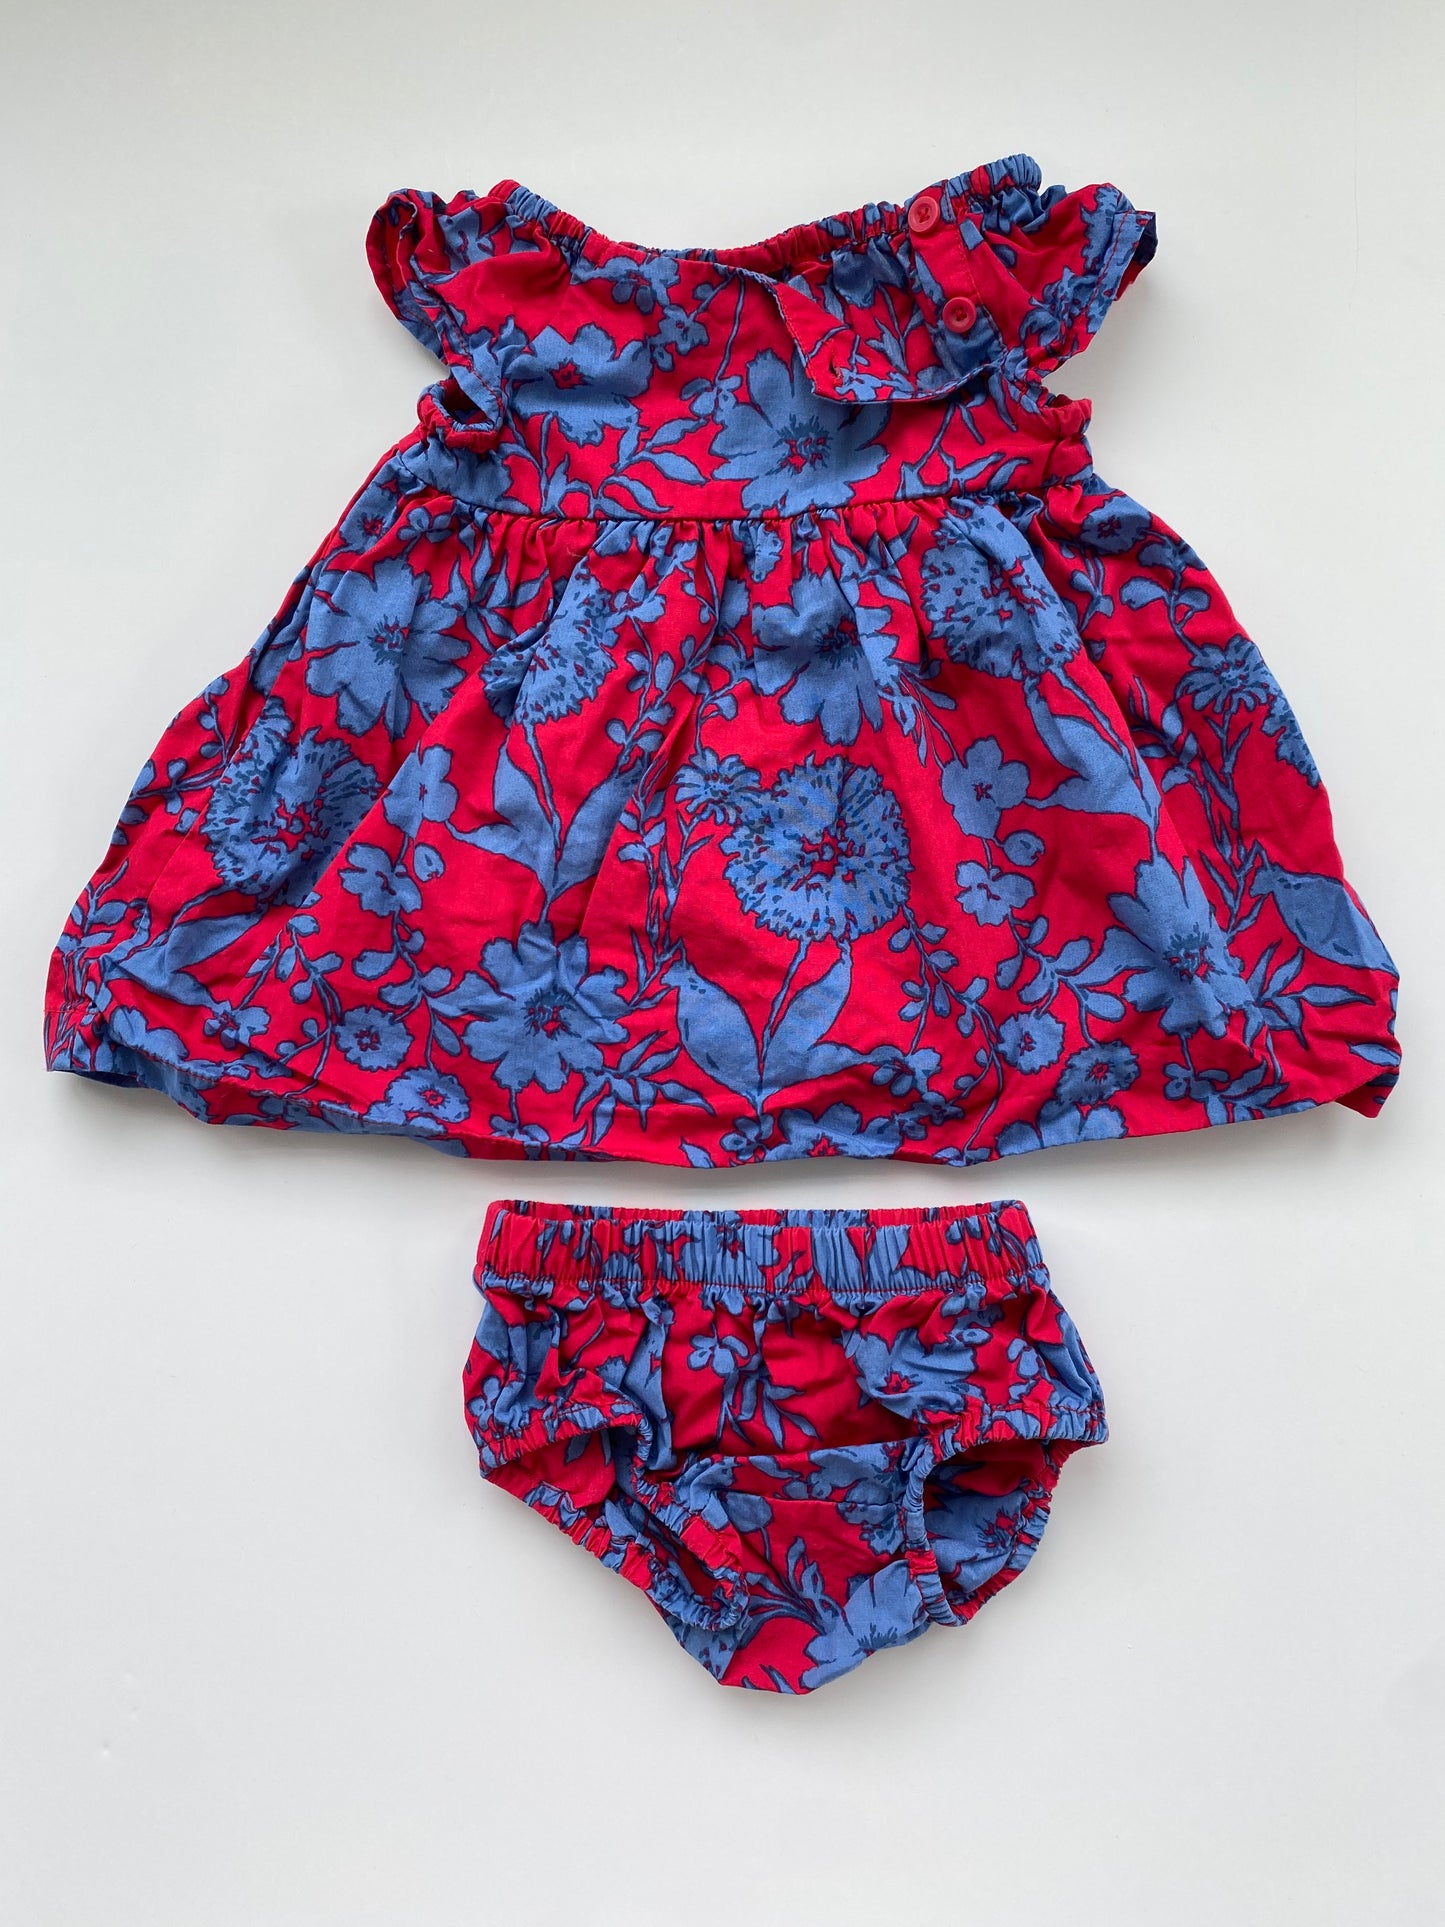 Tea Floral Dress Baby Girls Size 3-6 month - EUC